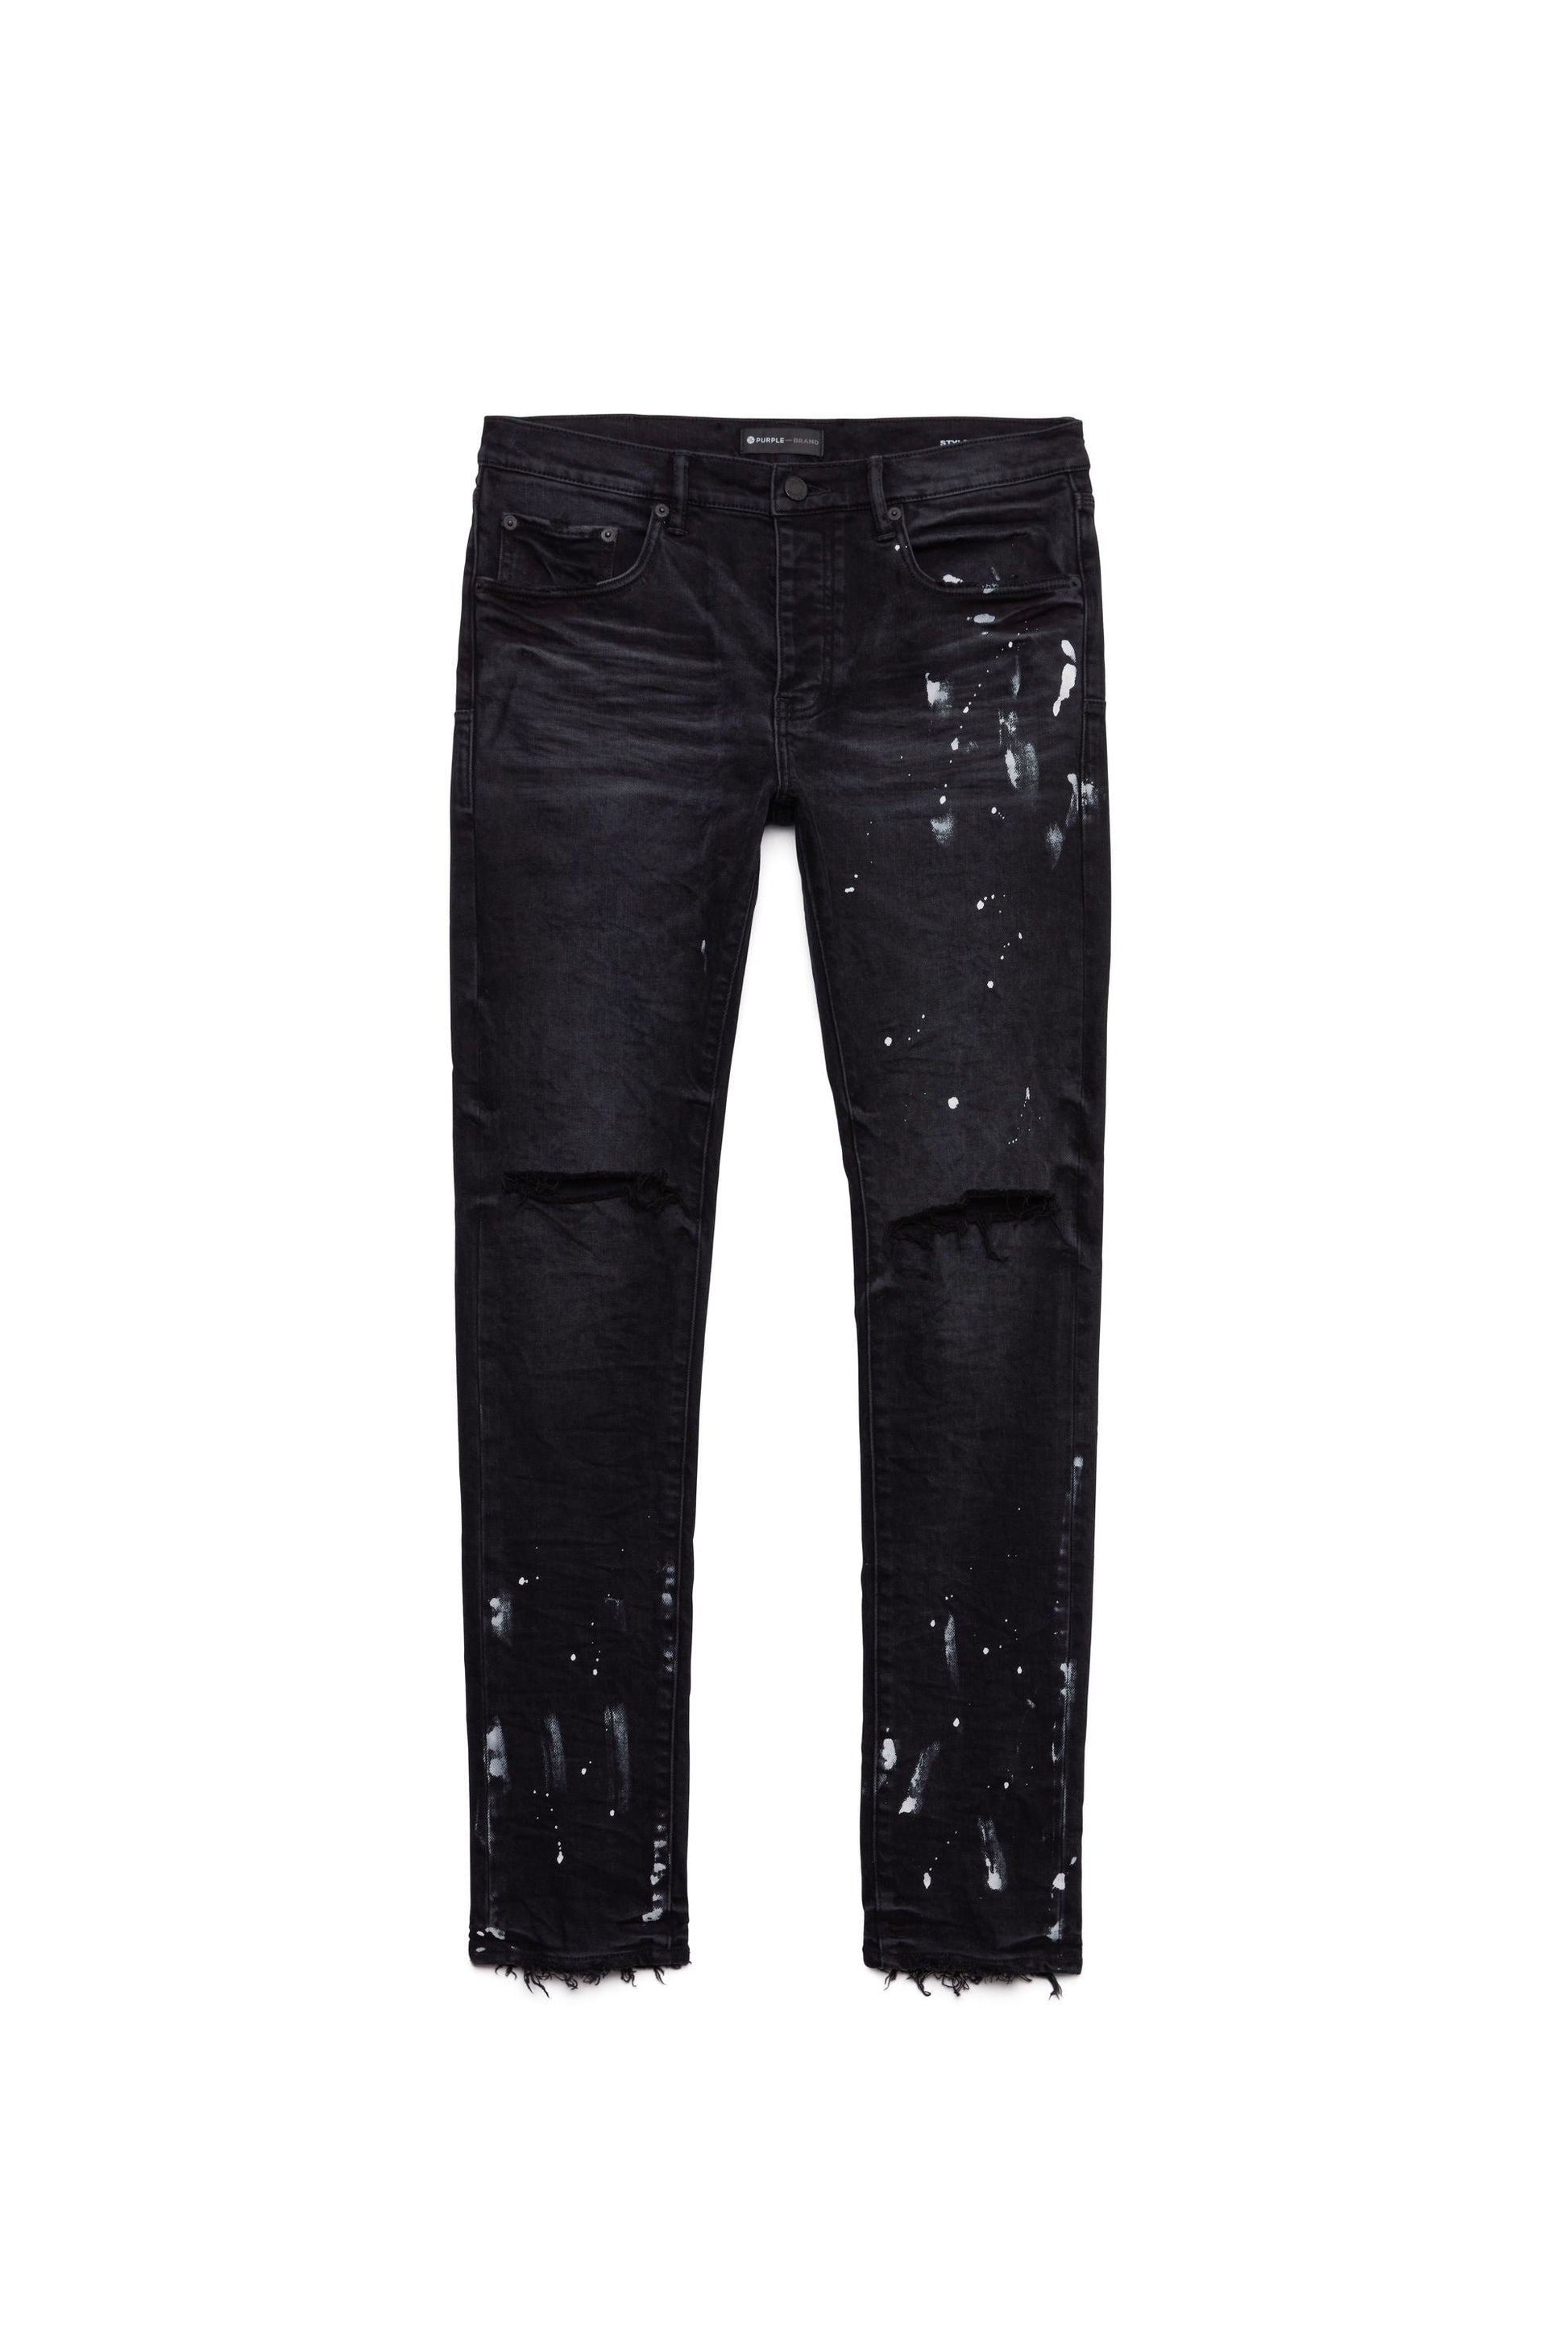 Purple Brand P001-BOS Slim Fit Jeans in Black Over Spray Men